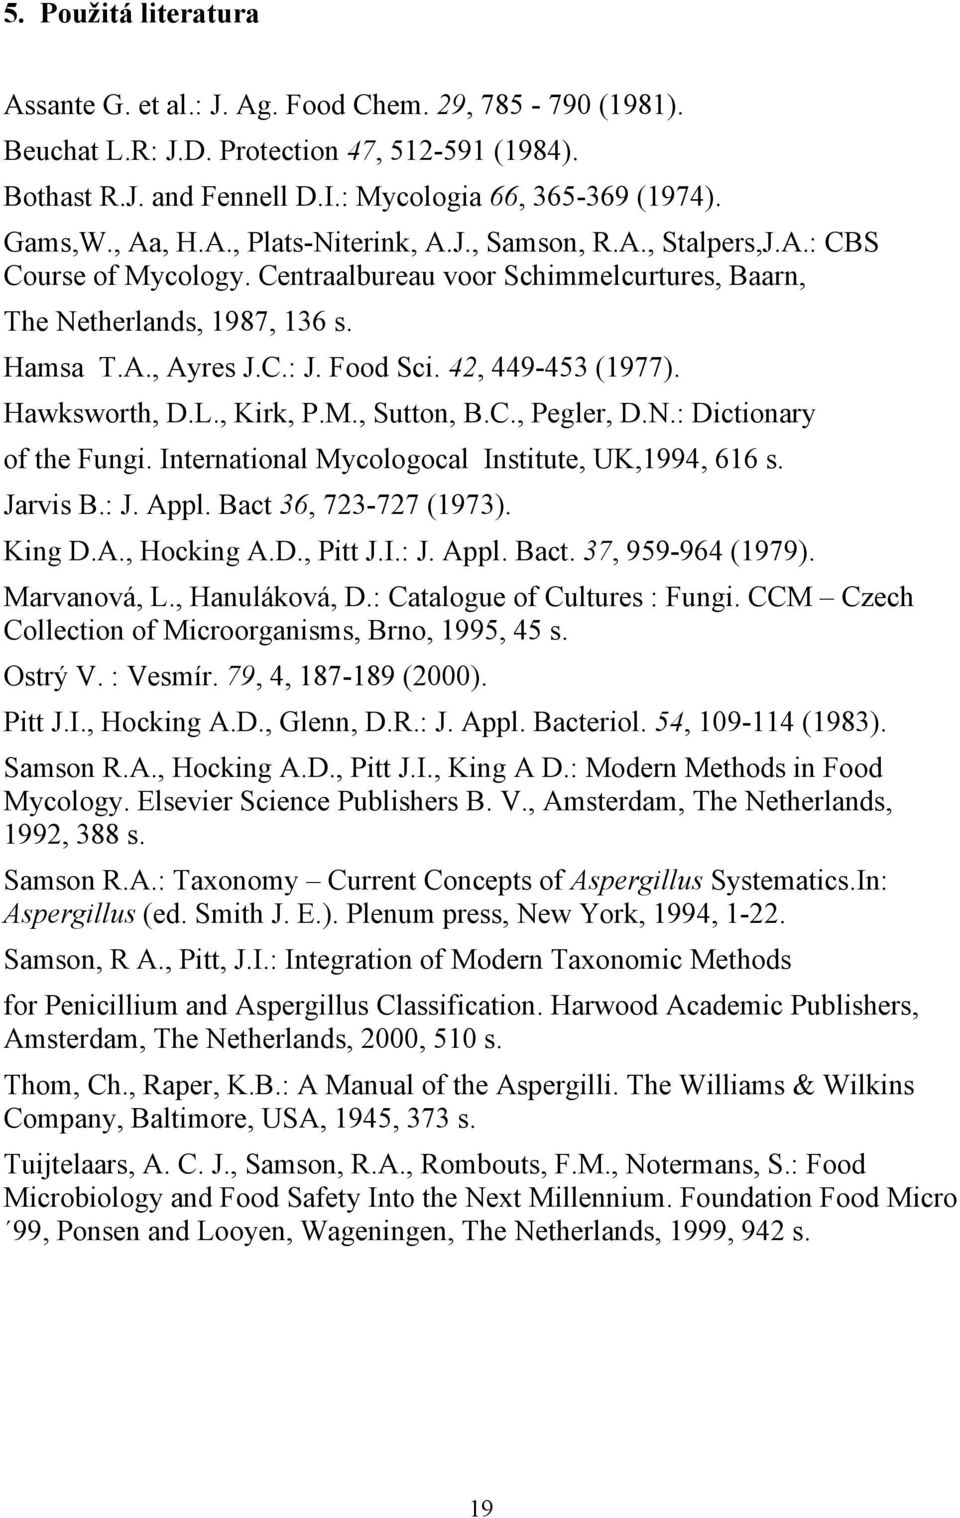 42, 449-453 (1977). Hawksworth, D.L., Kirk, P.M., Sutton, B.C., Pegler, D.N.: Dictionary of the Fungi. International Mycologocal Institute, UK,1994, 616 s. Jarvis B.: J. Appl. Bact 36, 723-727 (1973).